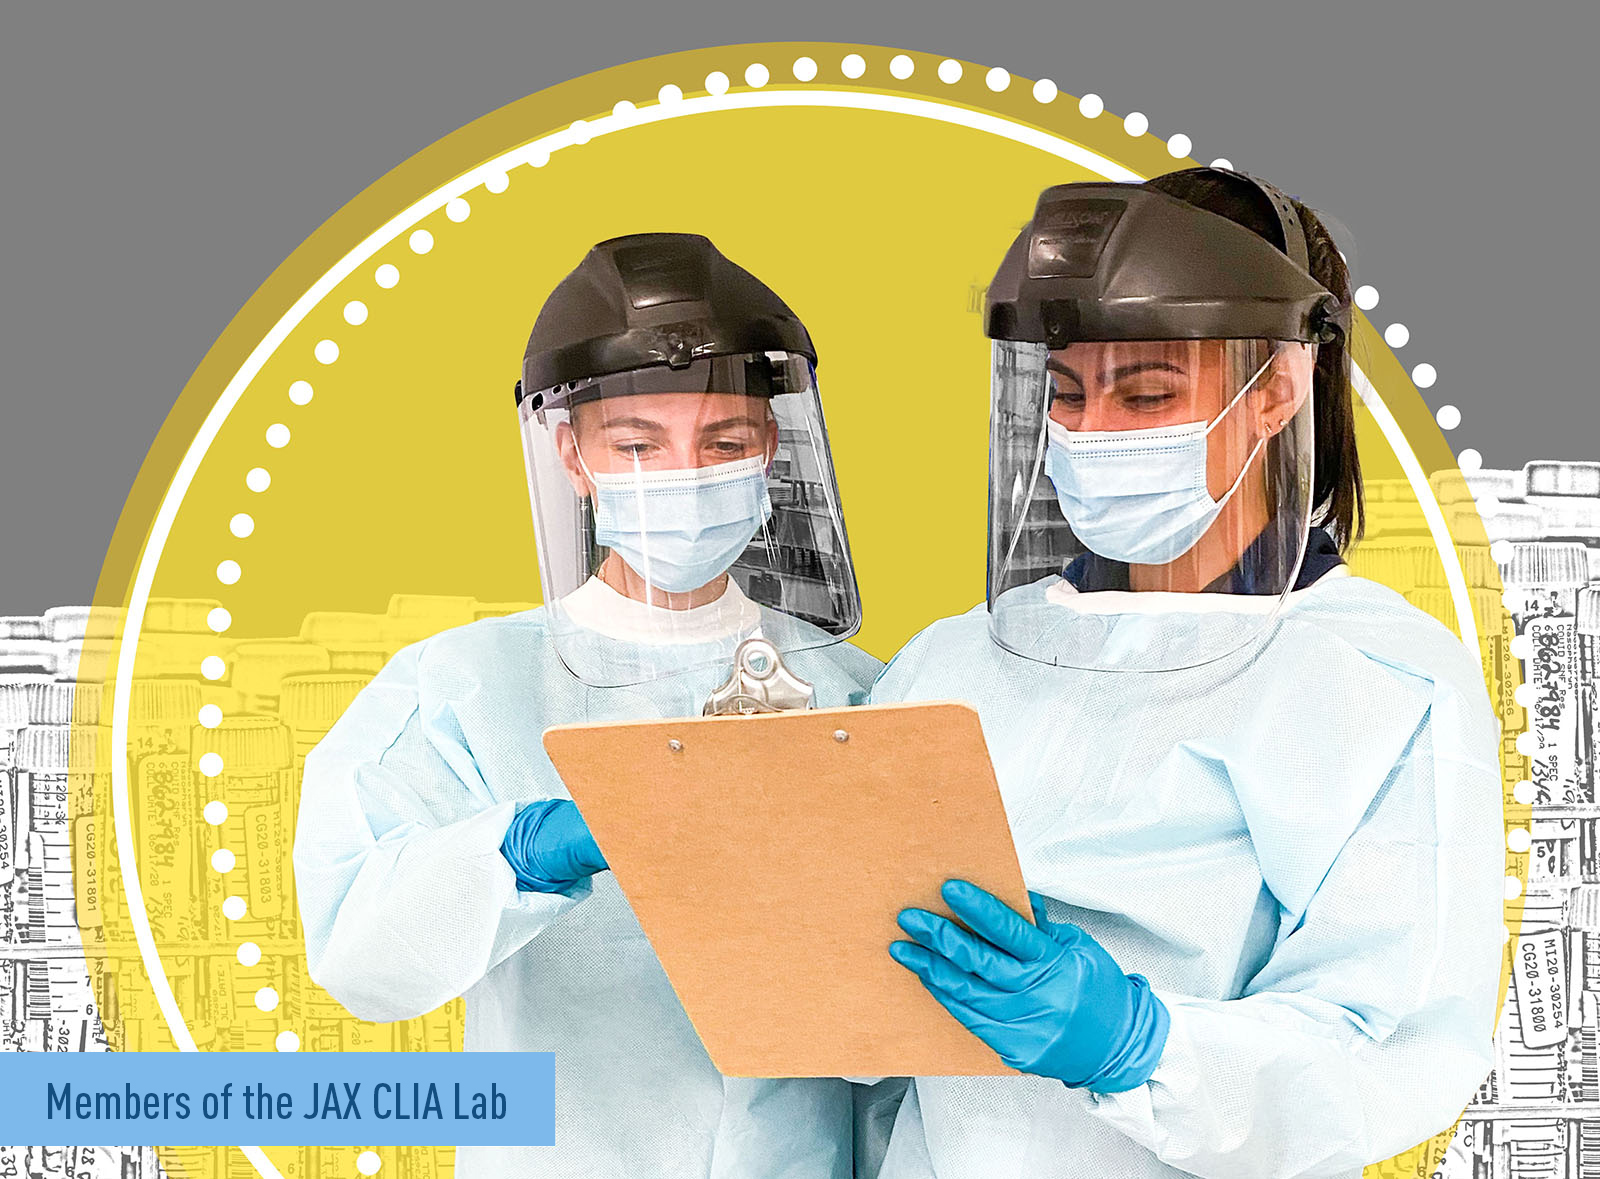 Two scientists working at the JAX CLIA lab